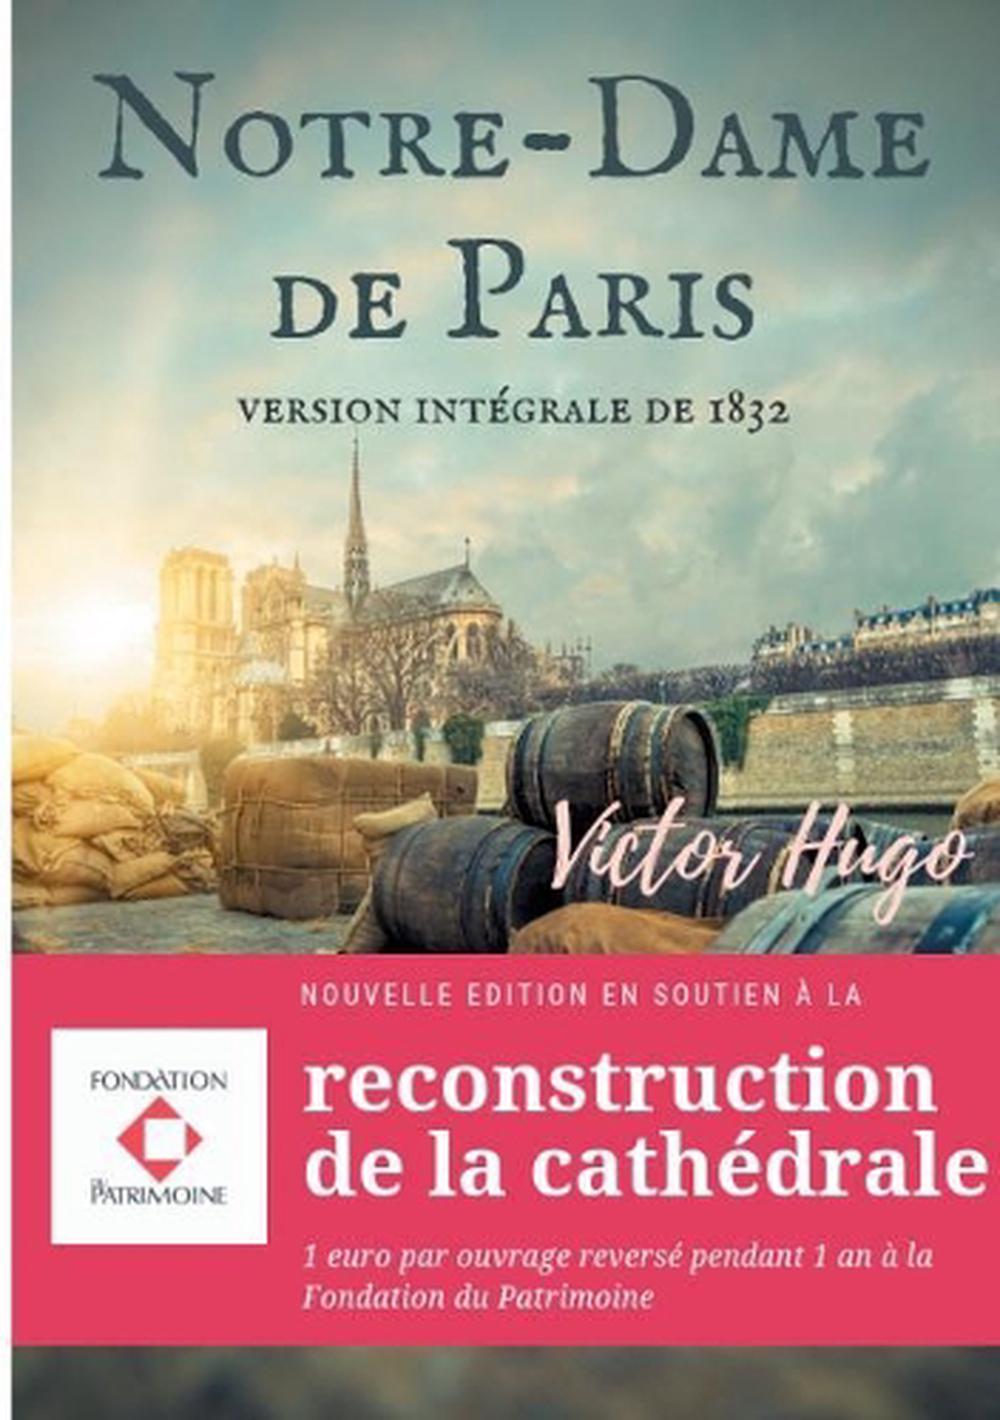 Notre-dame De Paris by Victor Hugo (French) Paperback Book Free